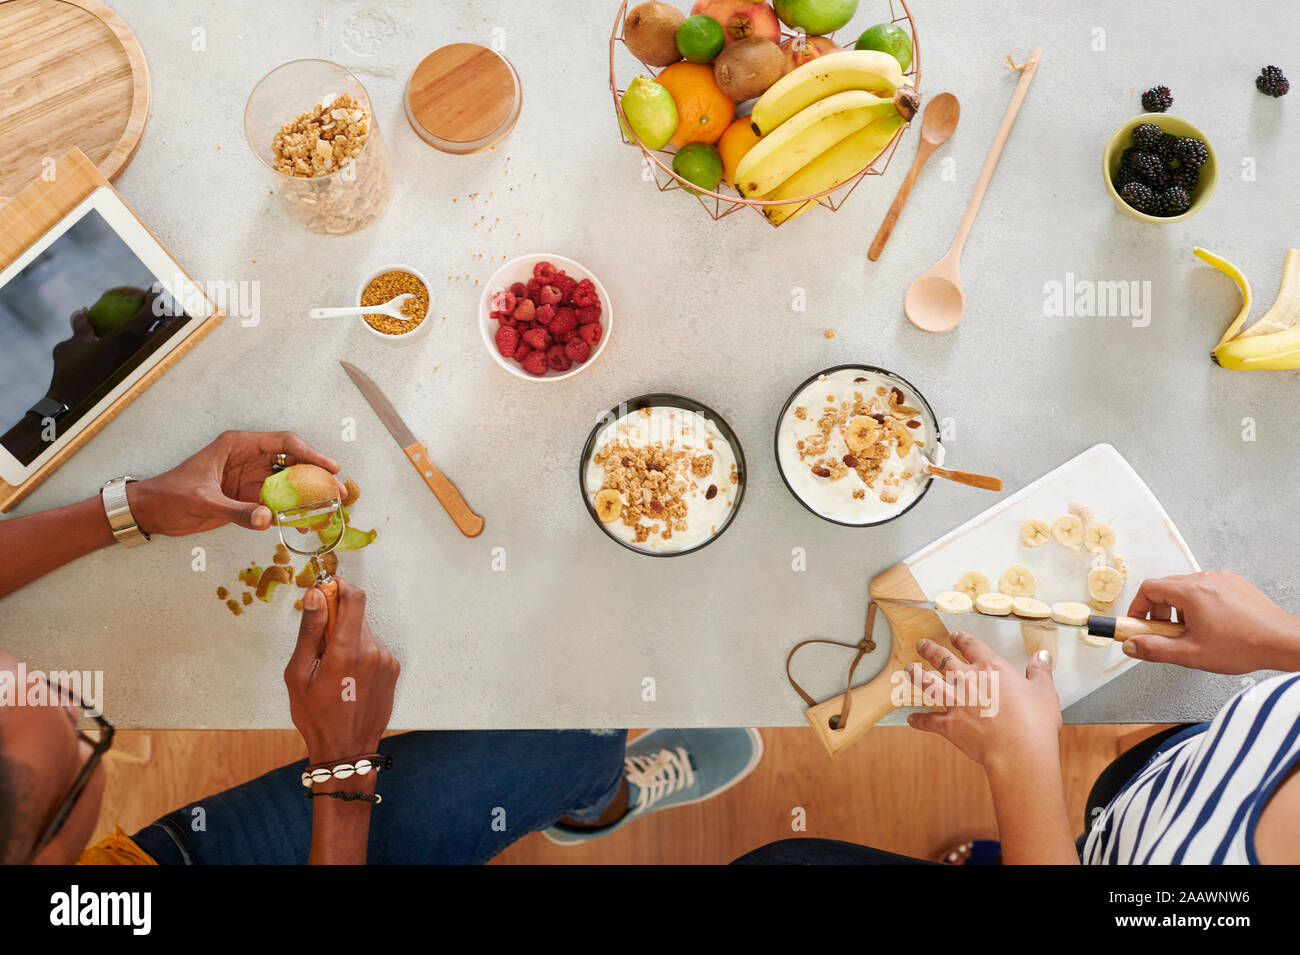 Coppia multietnica breakfasting insieme in cucina Foto Stock